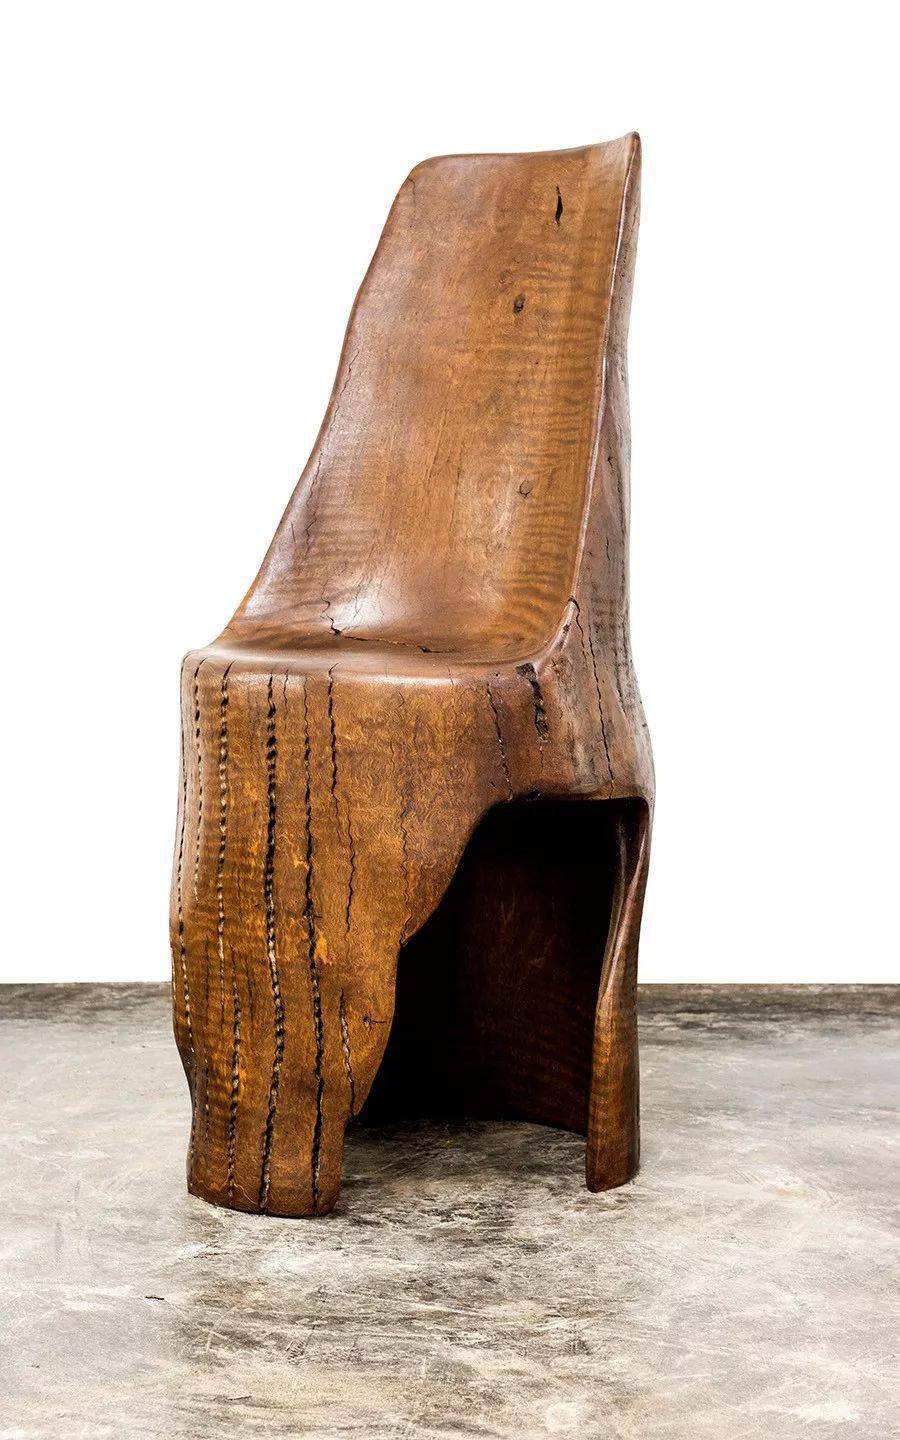 hugo frana丨用废弃木头做出最美家具